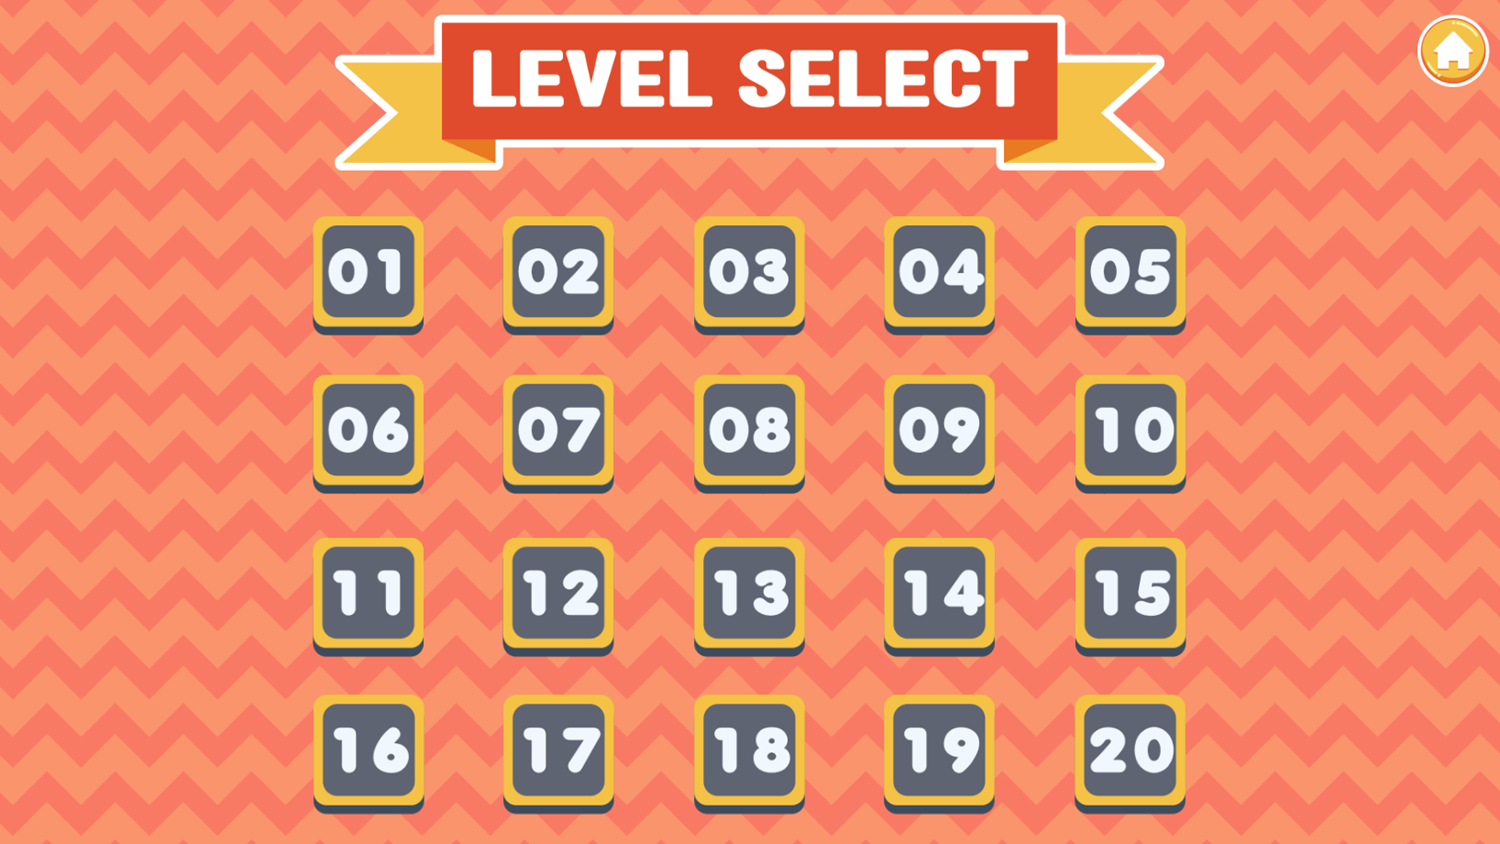 Floor is Lava Game Level Select Screen Screenshot.